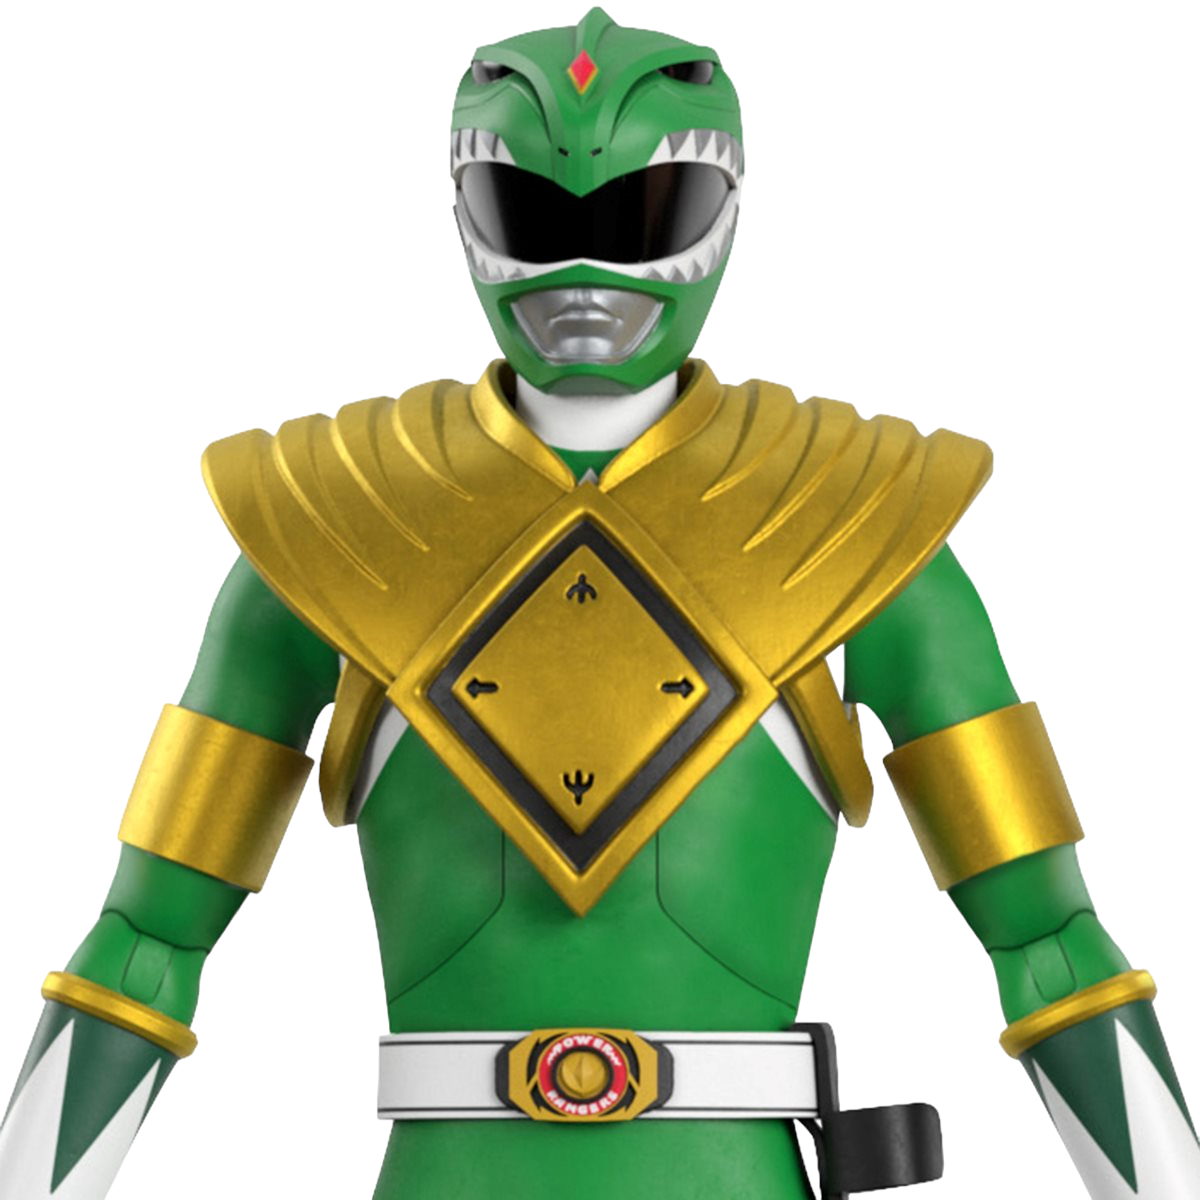 Super7 - Mighty Morphin Power Rangers Green Ranger